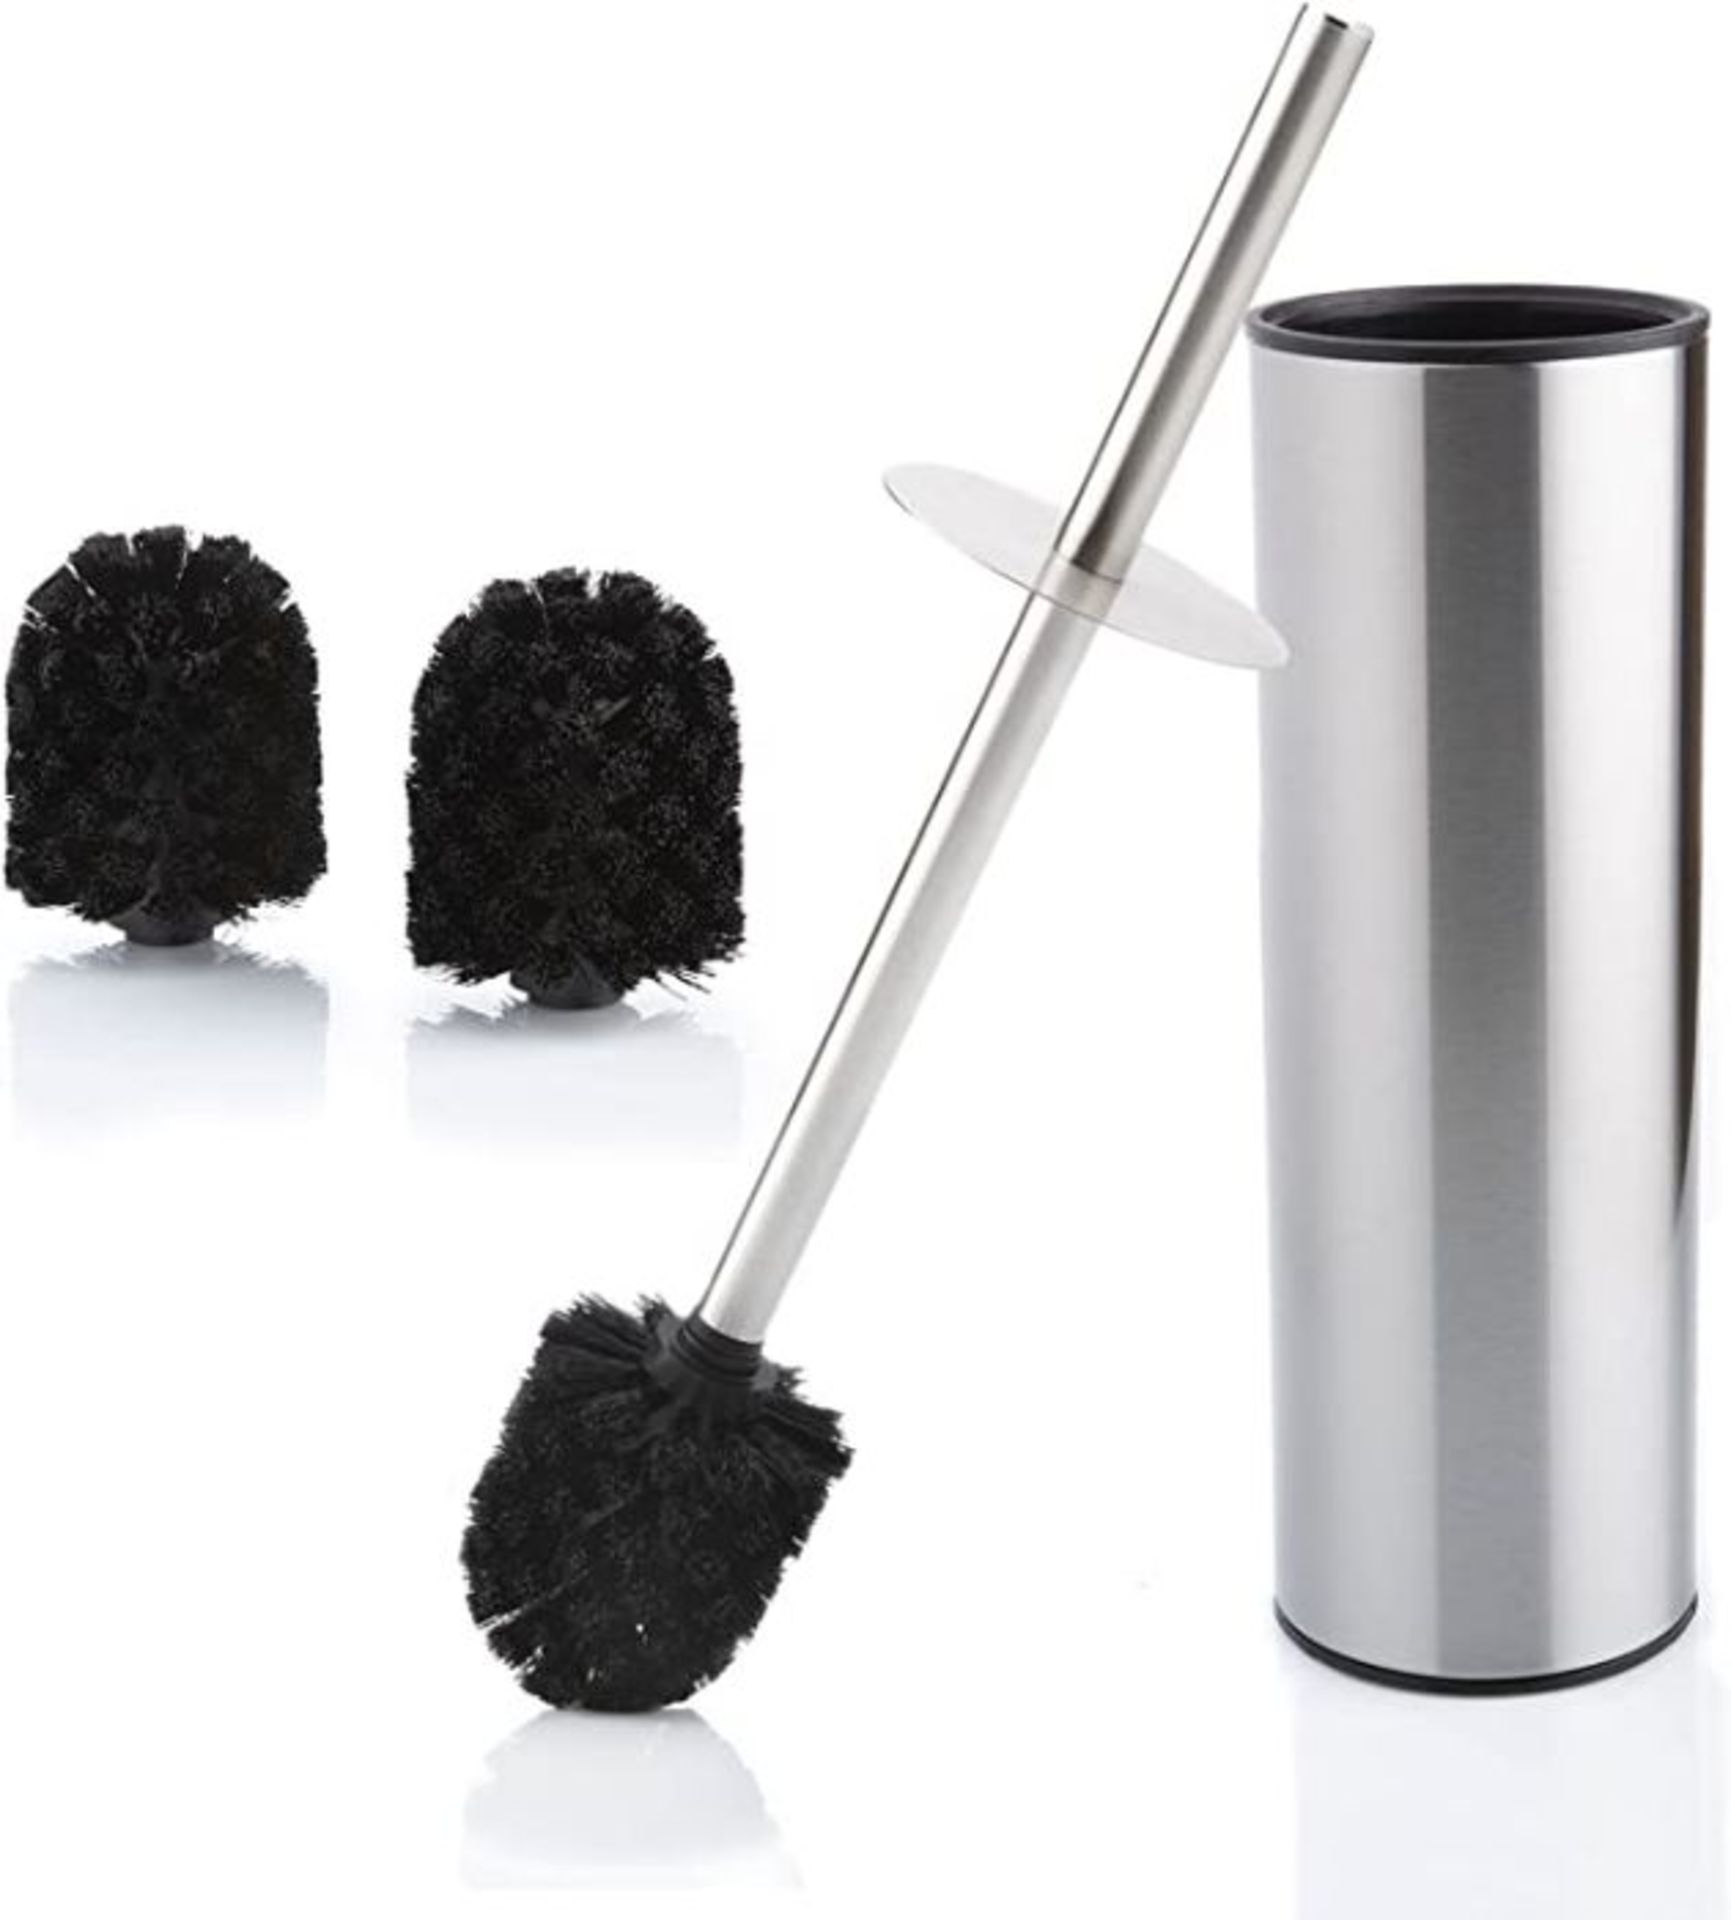 Bamodi Toilet Brush with Holder - Free Standing Stainless Steel Toilet Brushes including 3 Brush - Image 2 of 2